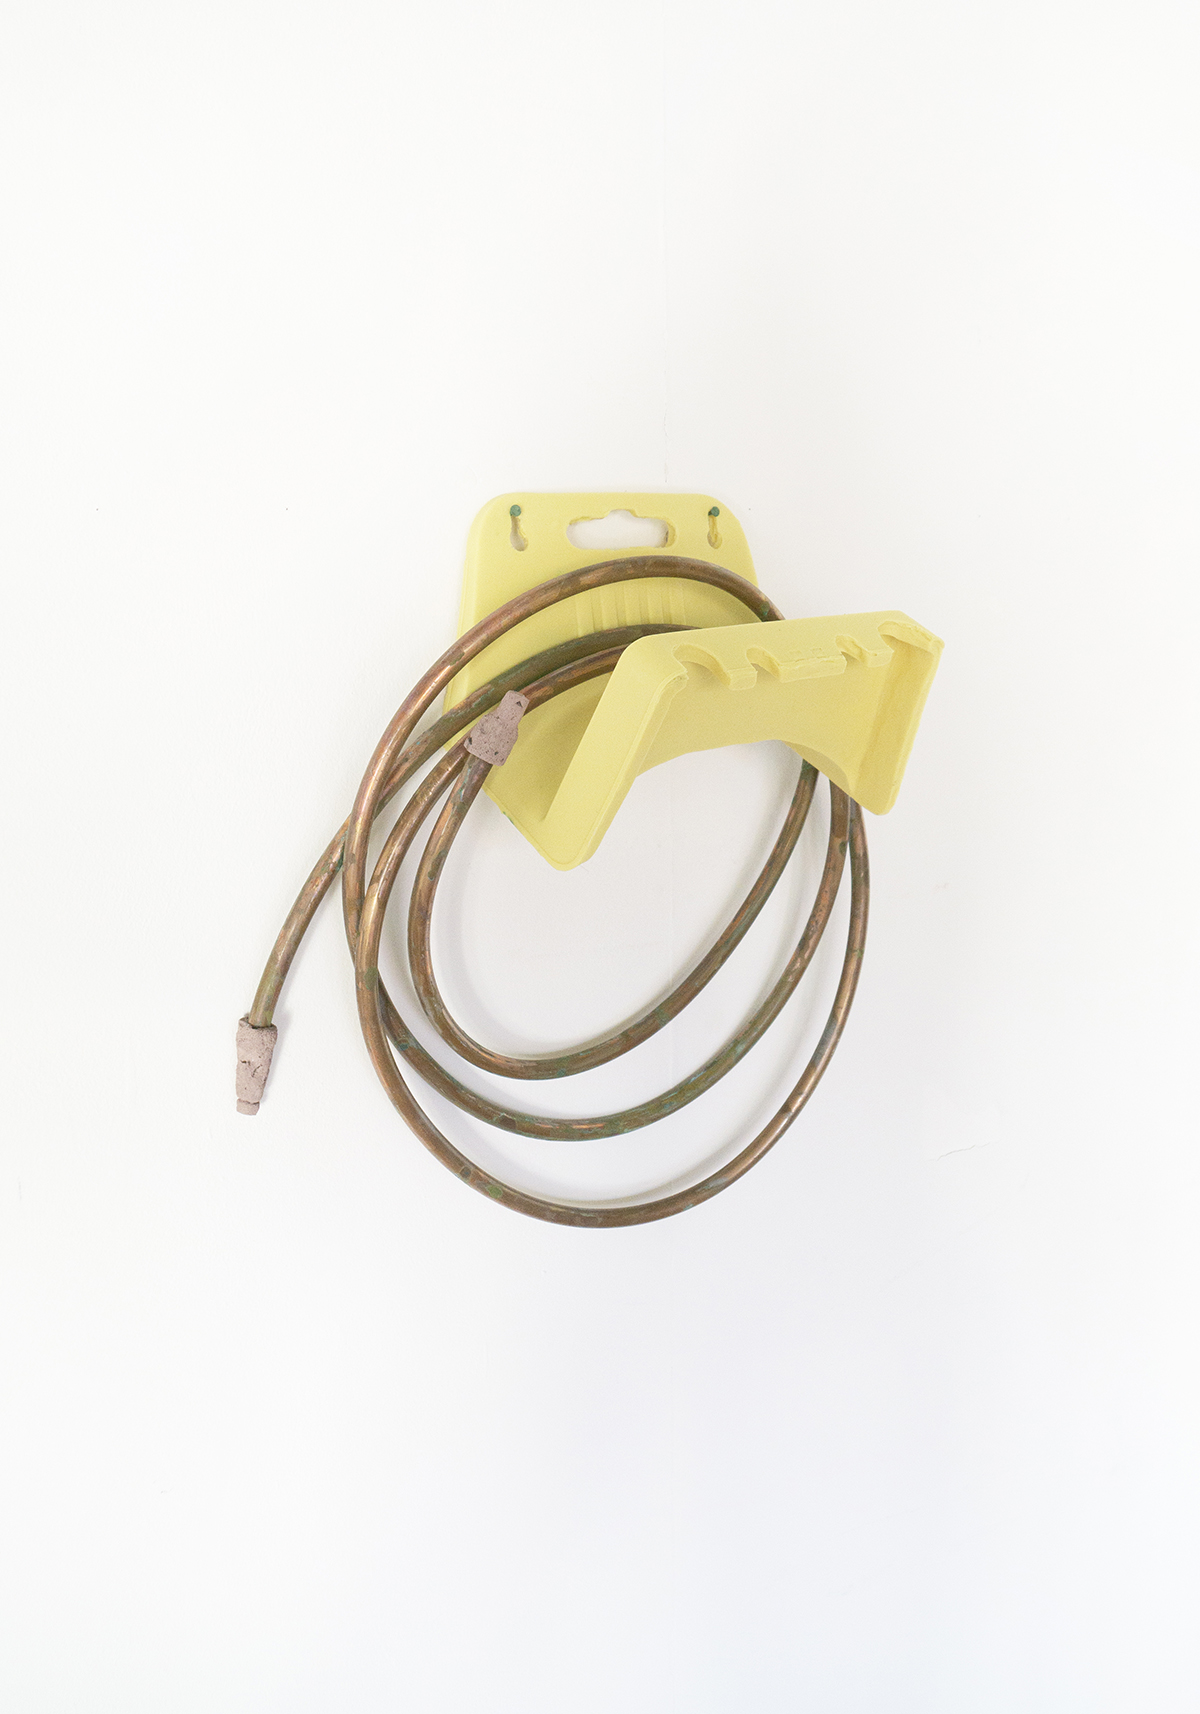 A rubber cast of a garden allotment hose holder with a copper hosepipe.
